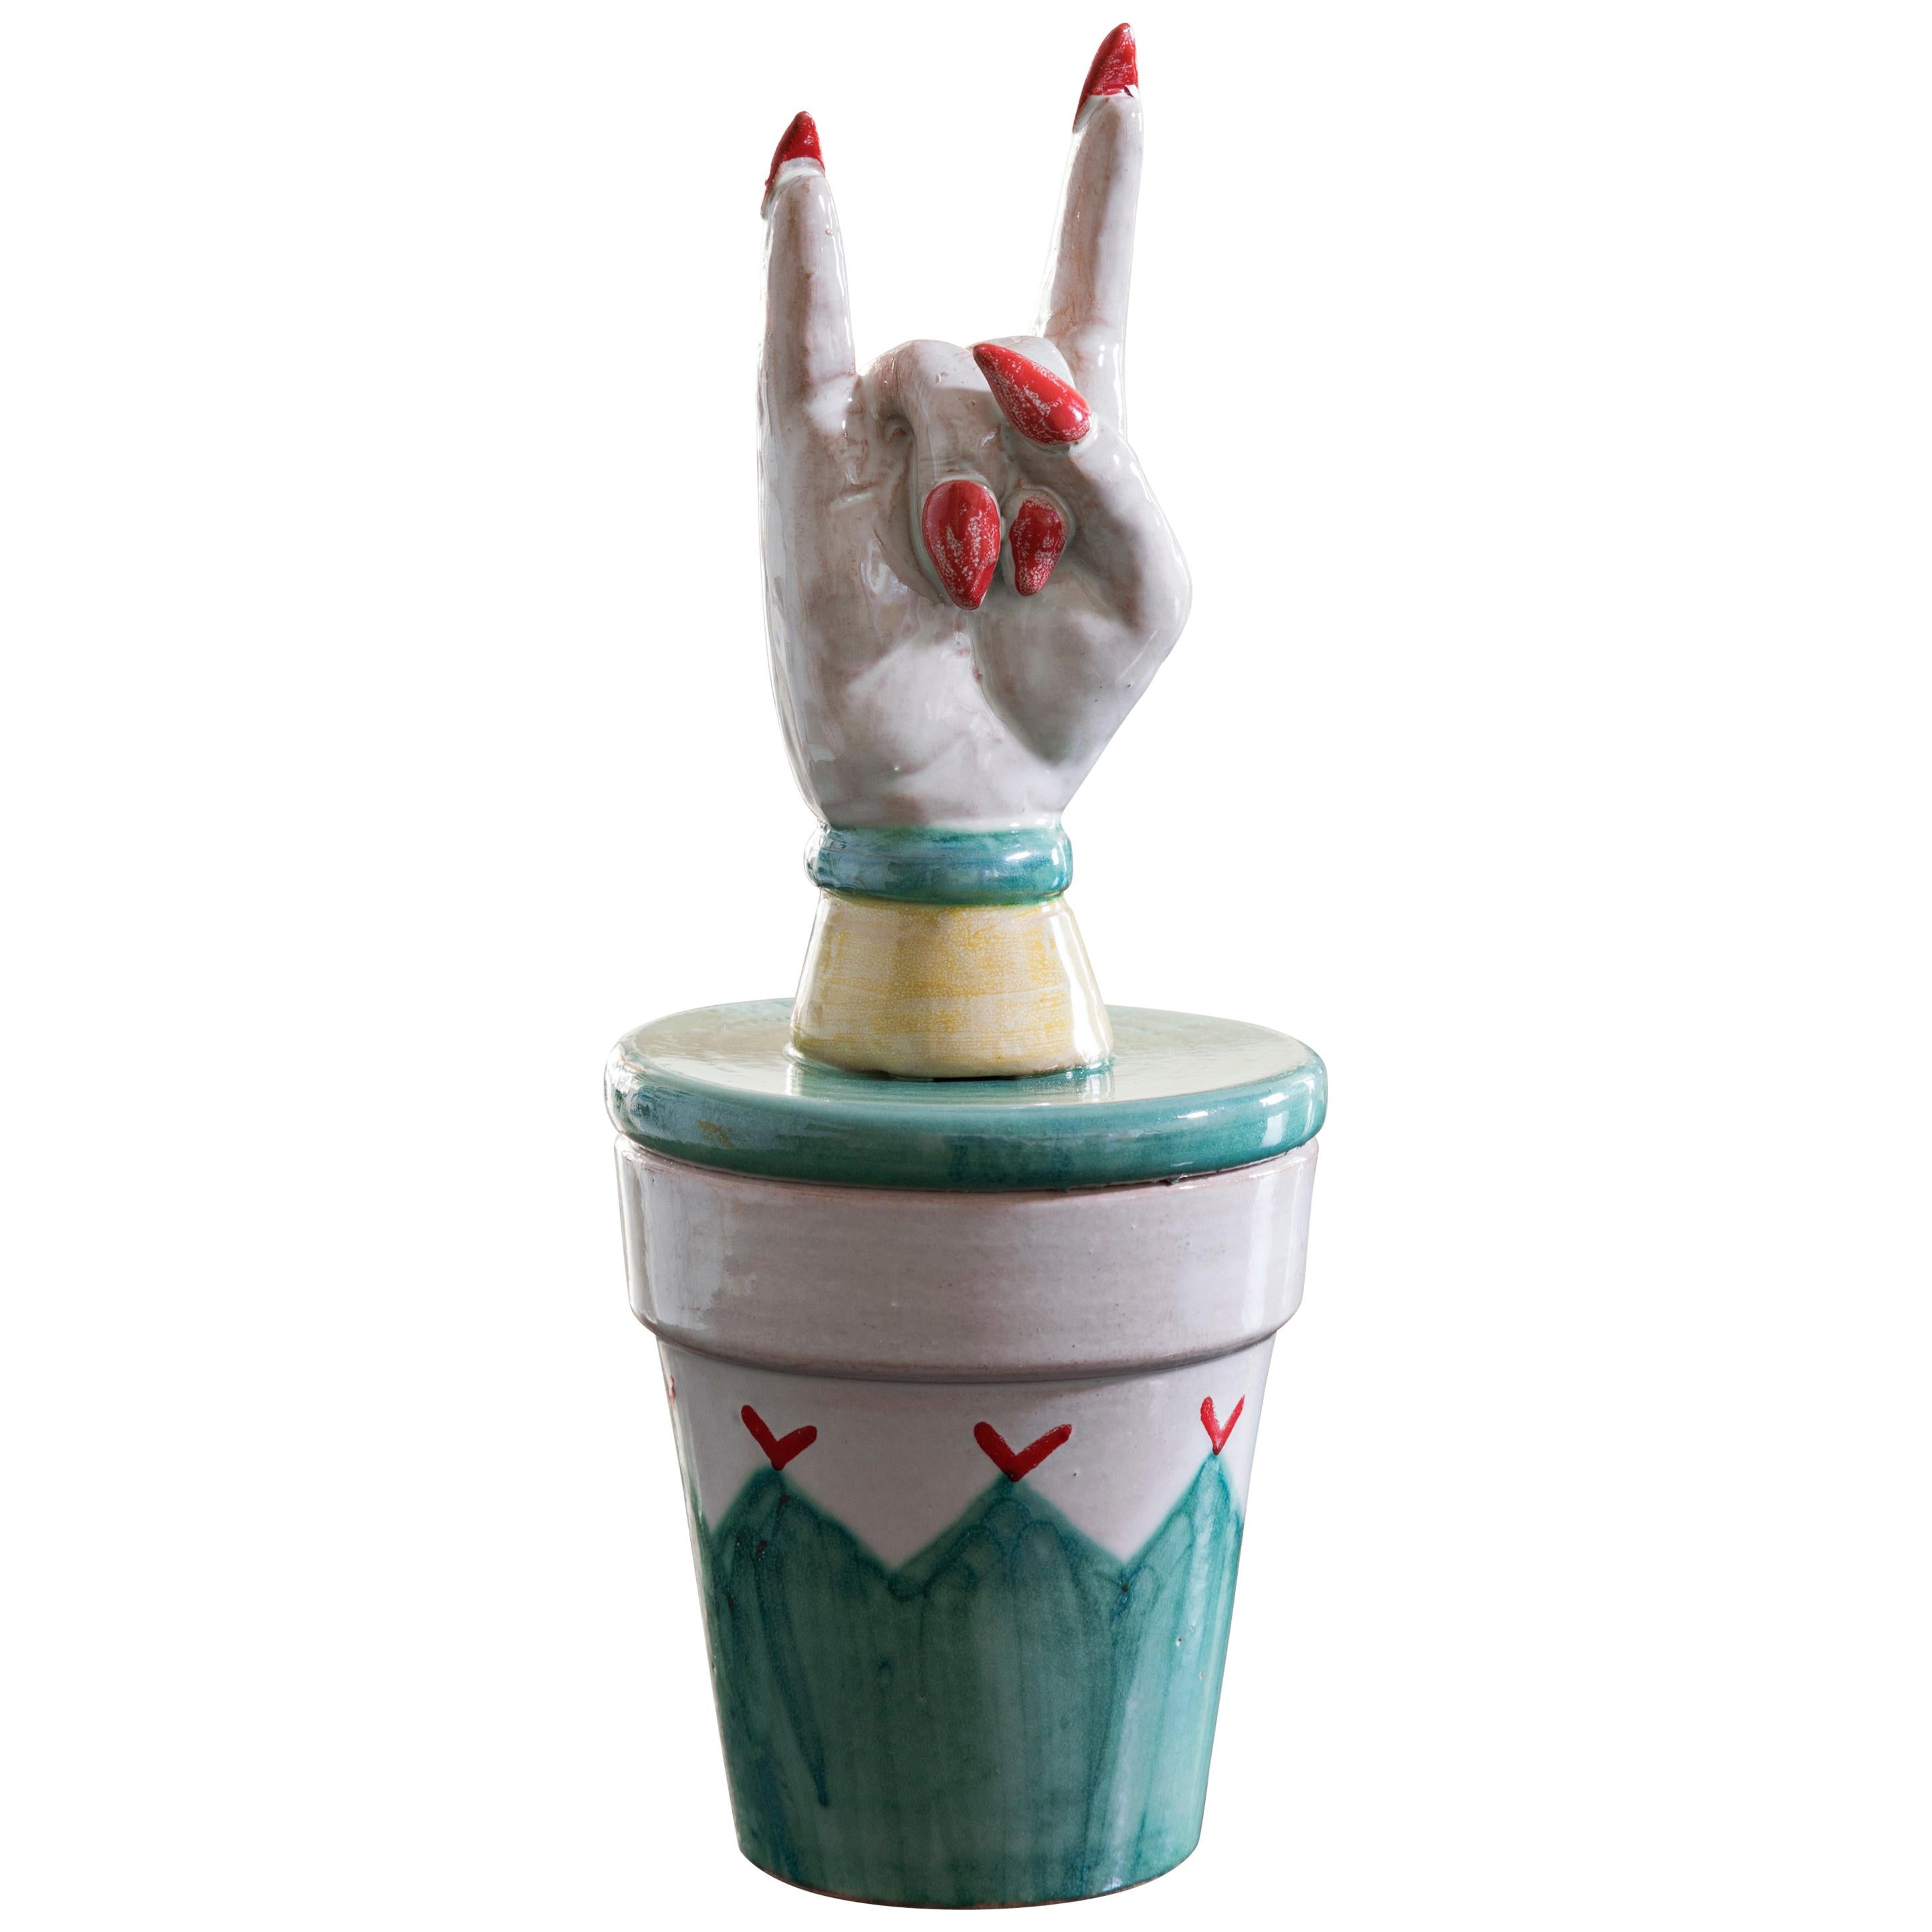 Contemporary Ceramic Vasetto Scaramantico Superstitious Little Jar For Sale